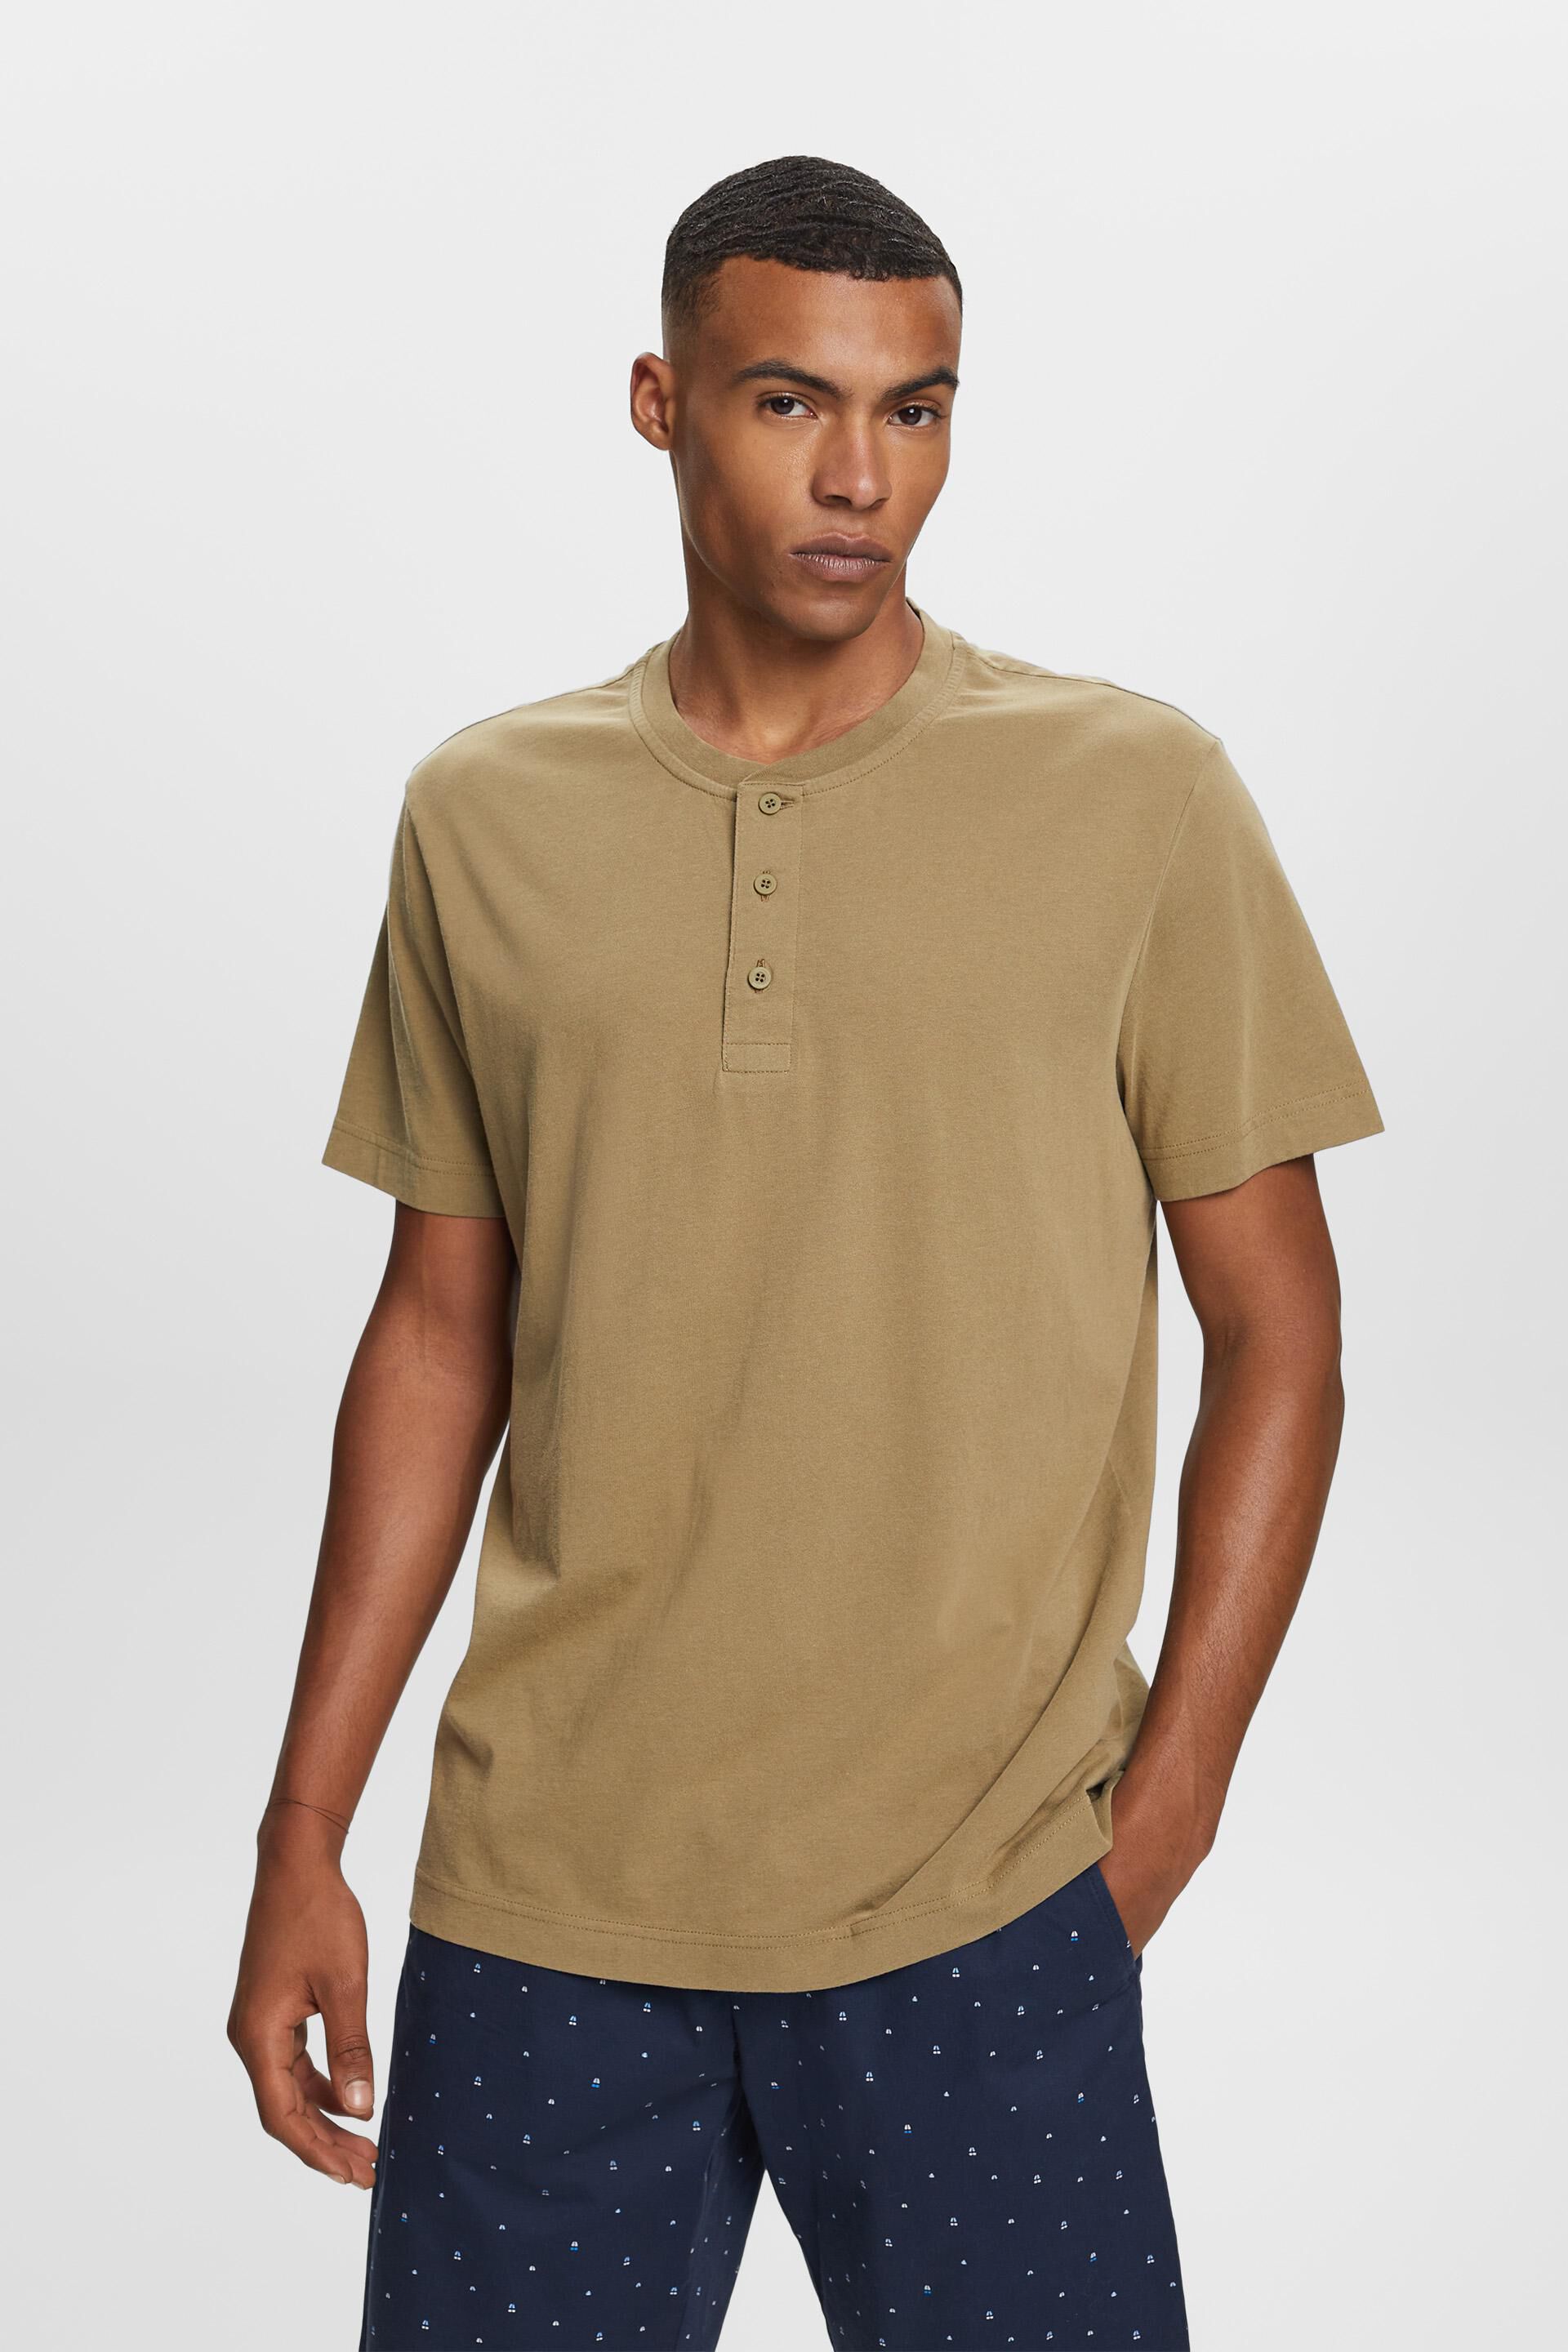 Esprit 100% cotton Henley t-shirt,